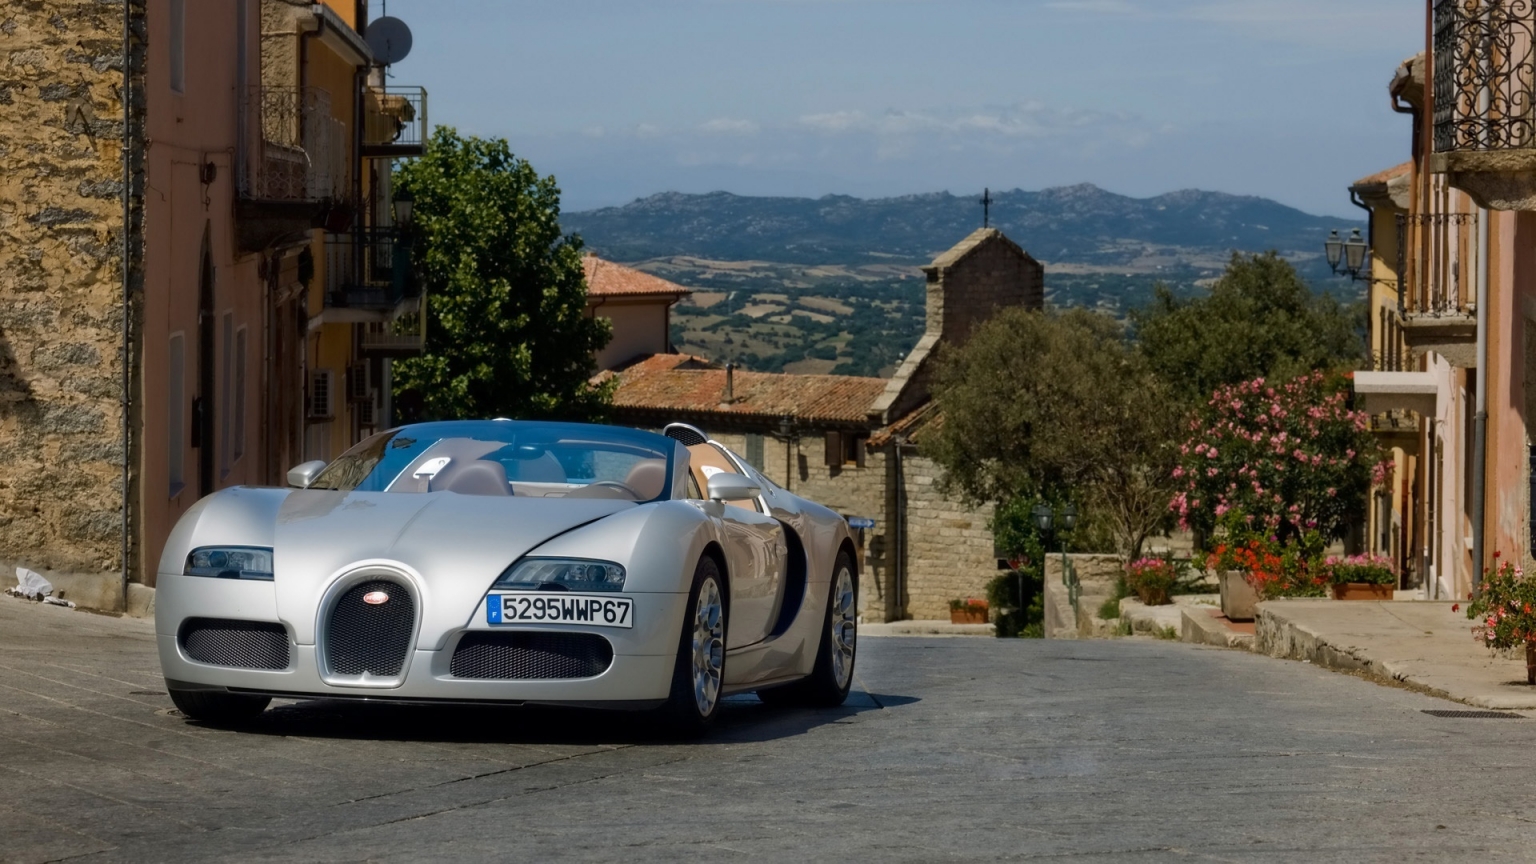 Bugatti Veyron 16.4 Grand Sport 2010 in Sardinia - Front Angle for 1536 x 864 HDTV resolution